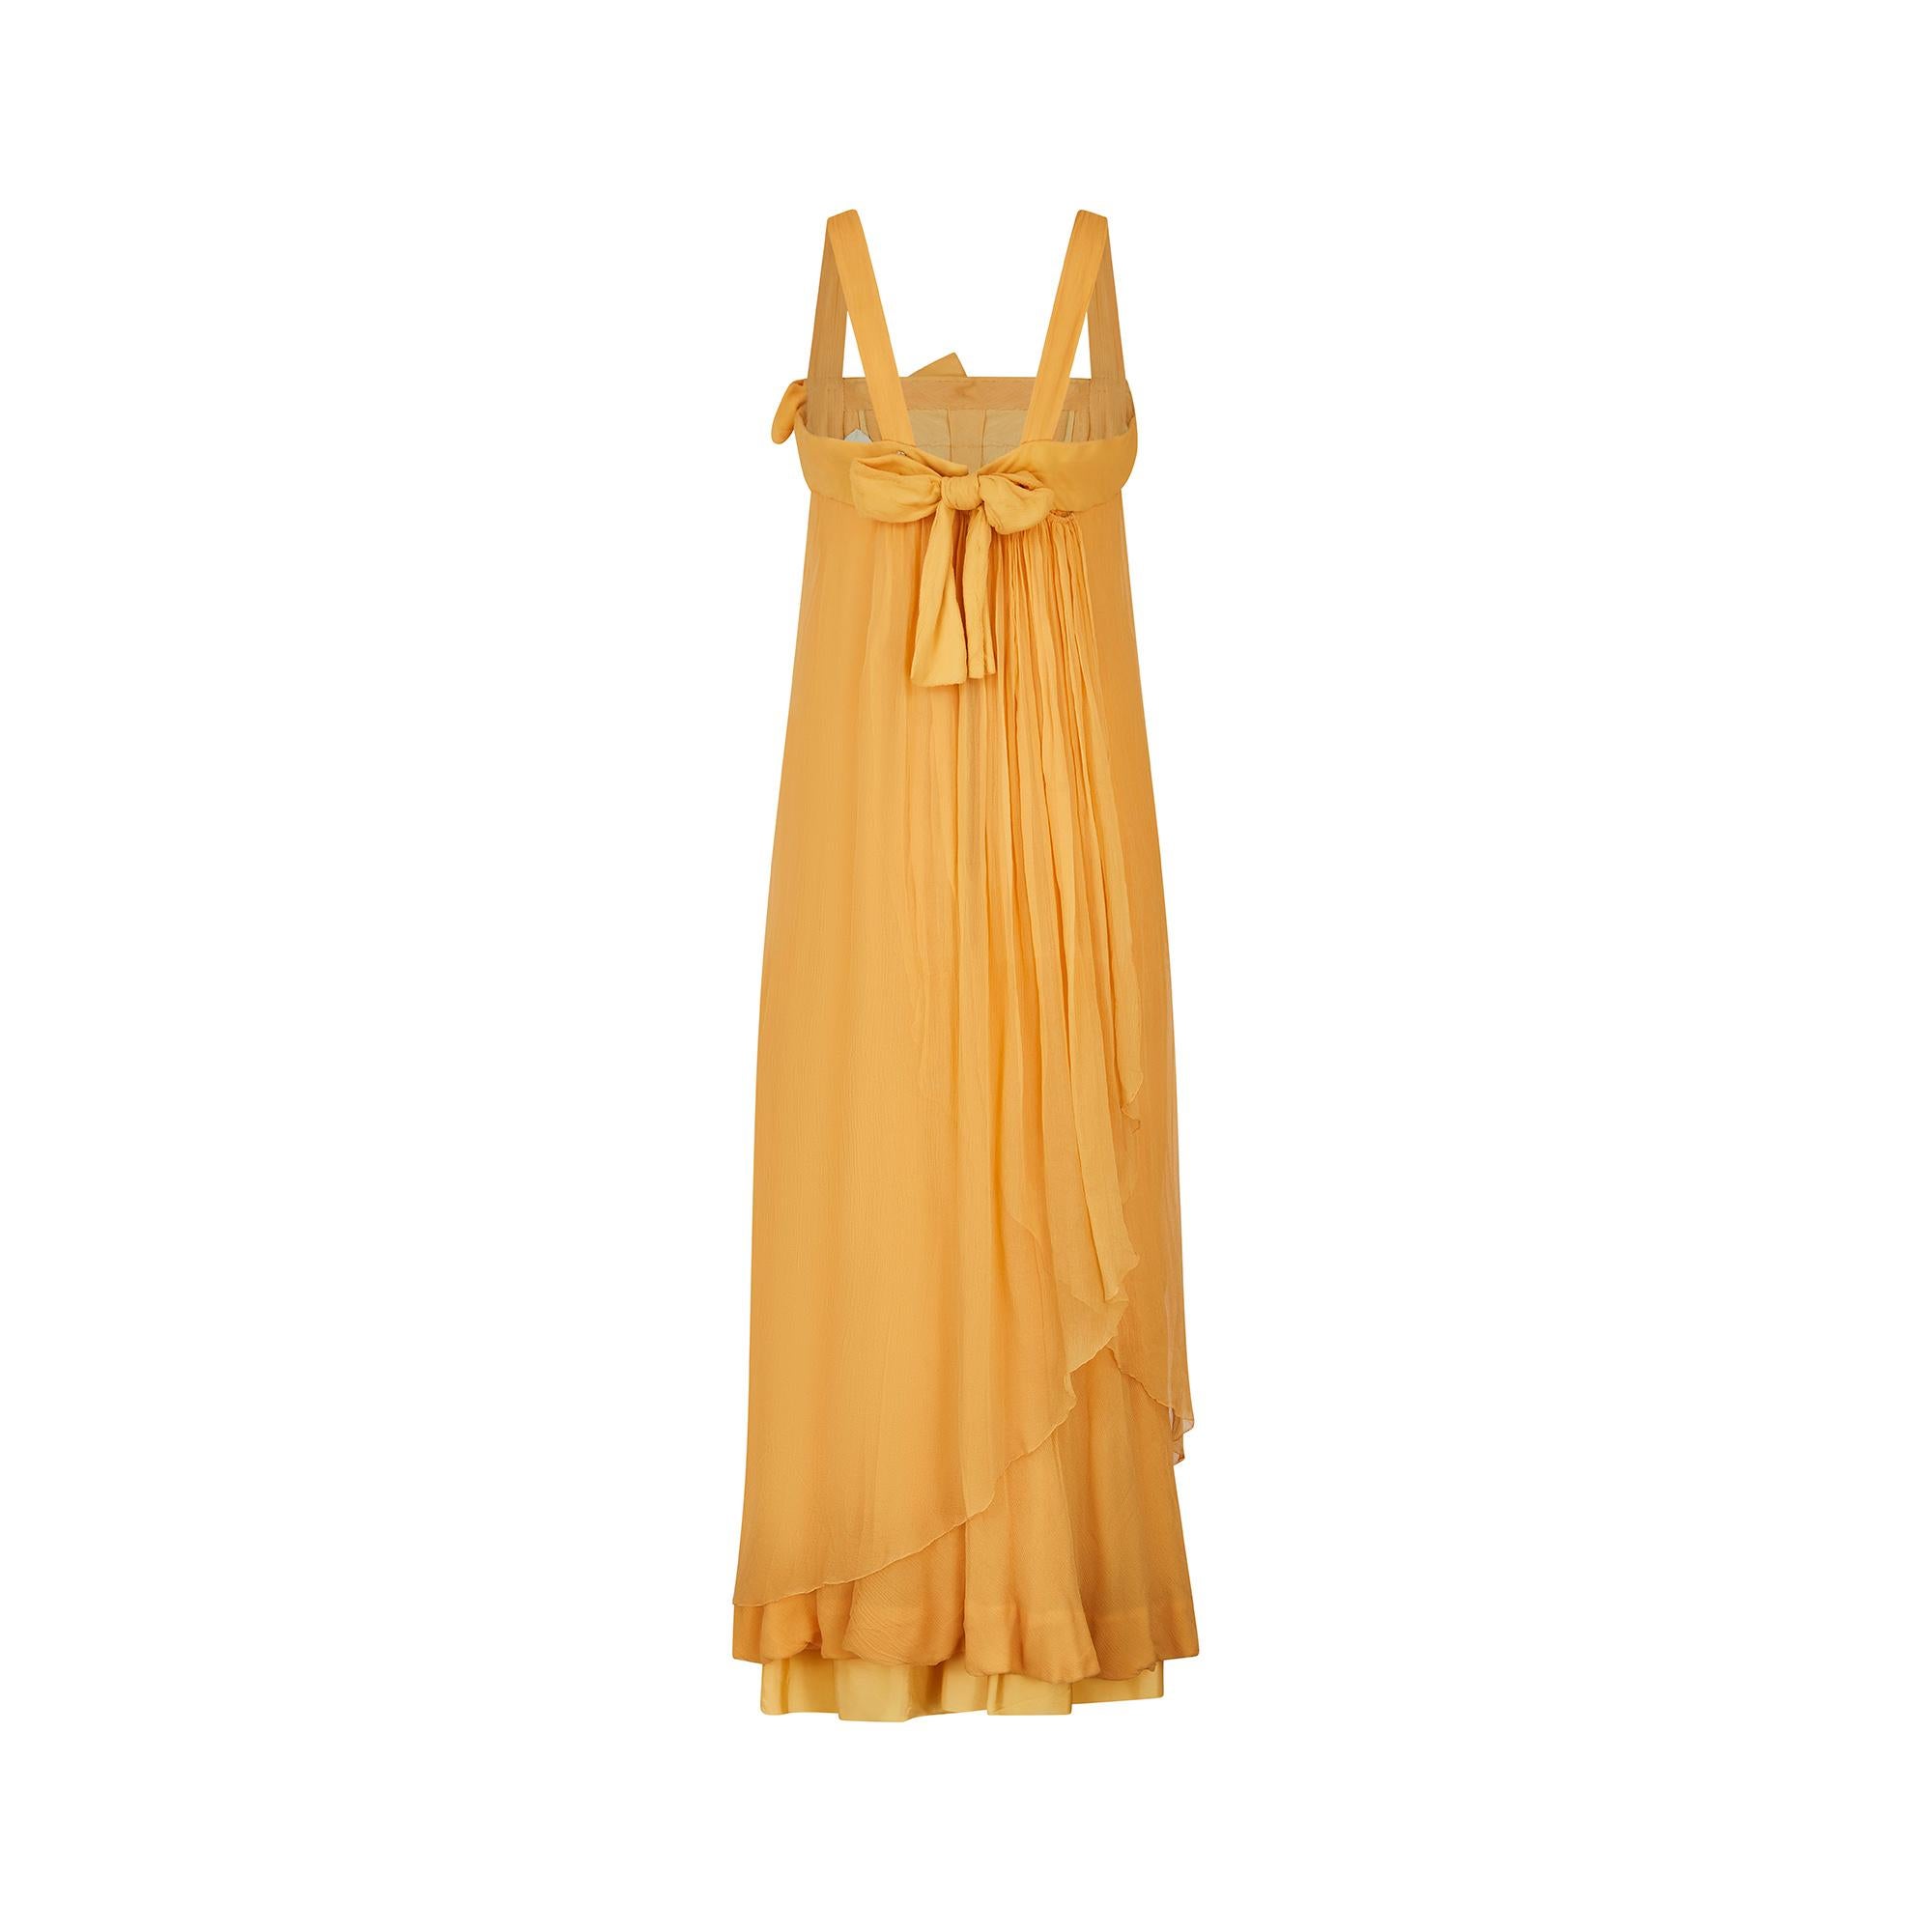 Women's 1950s Jacques Heim Haute Couture Yellow Chiffon Dress For Sale